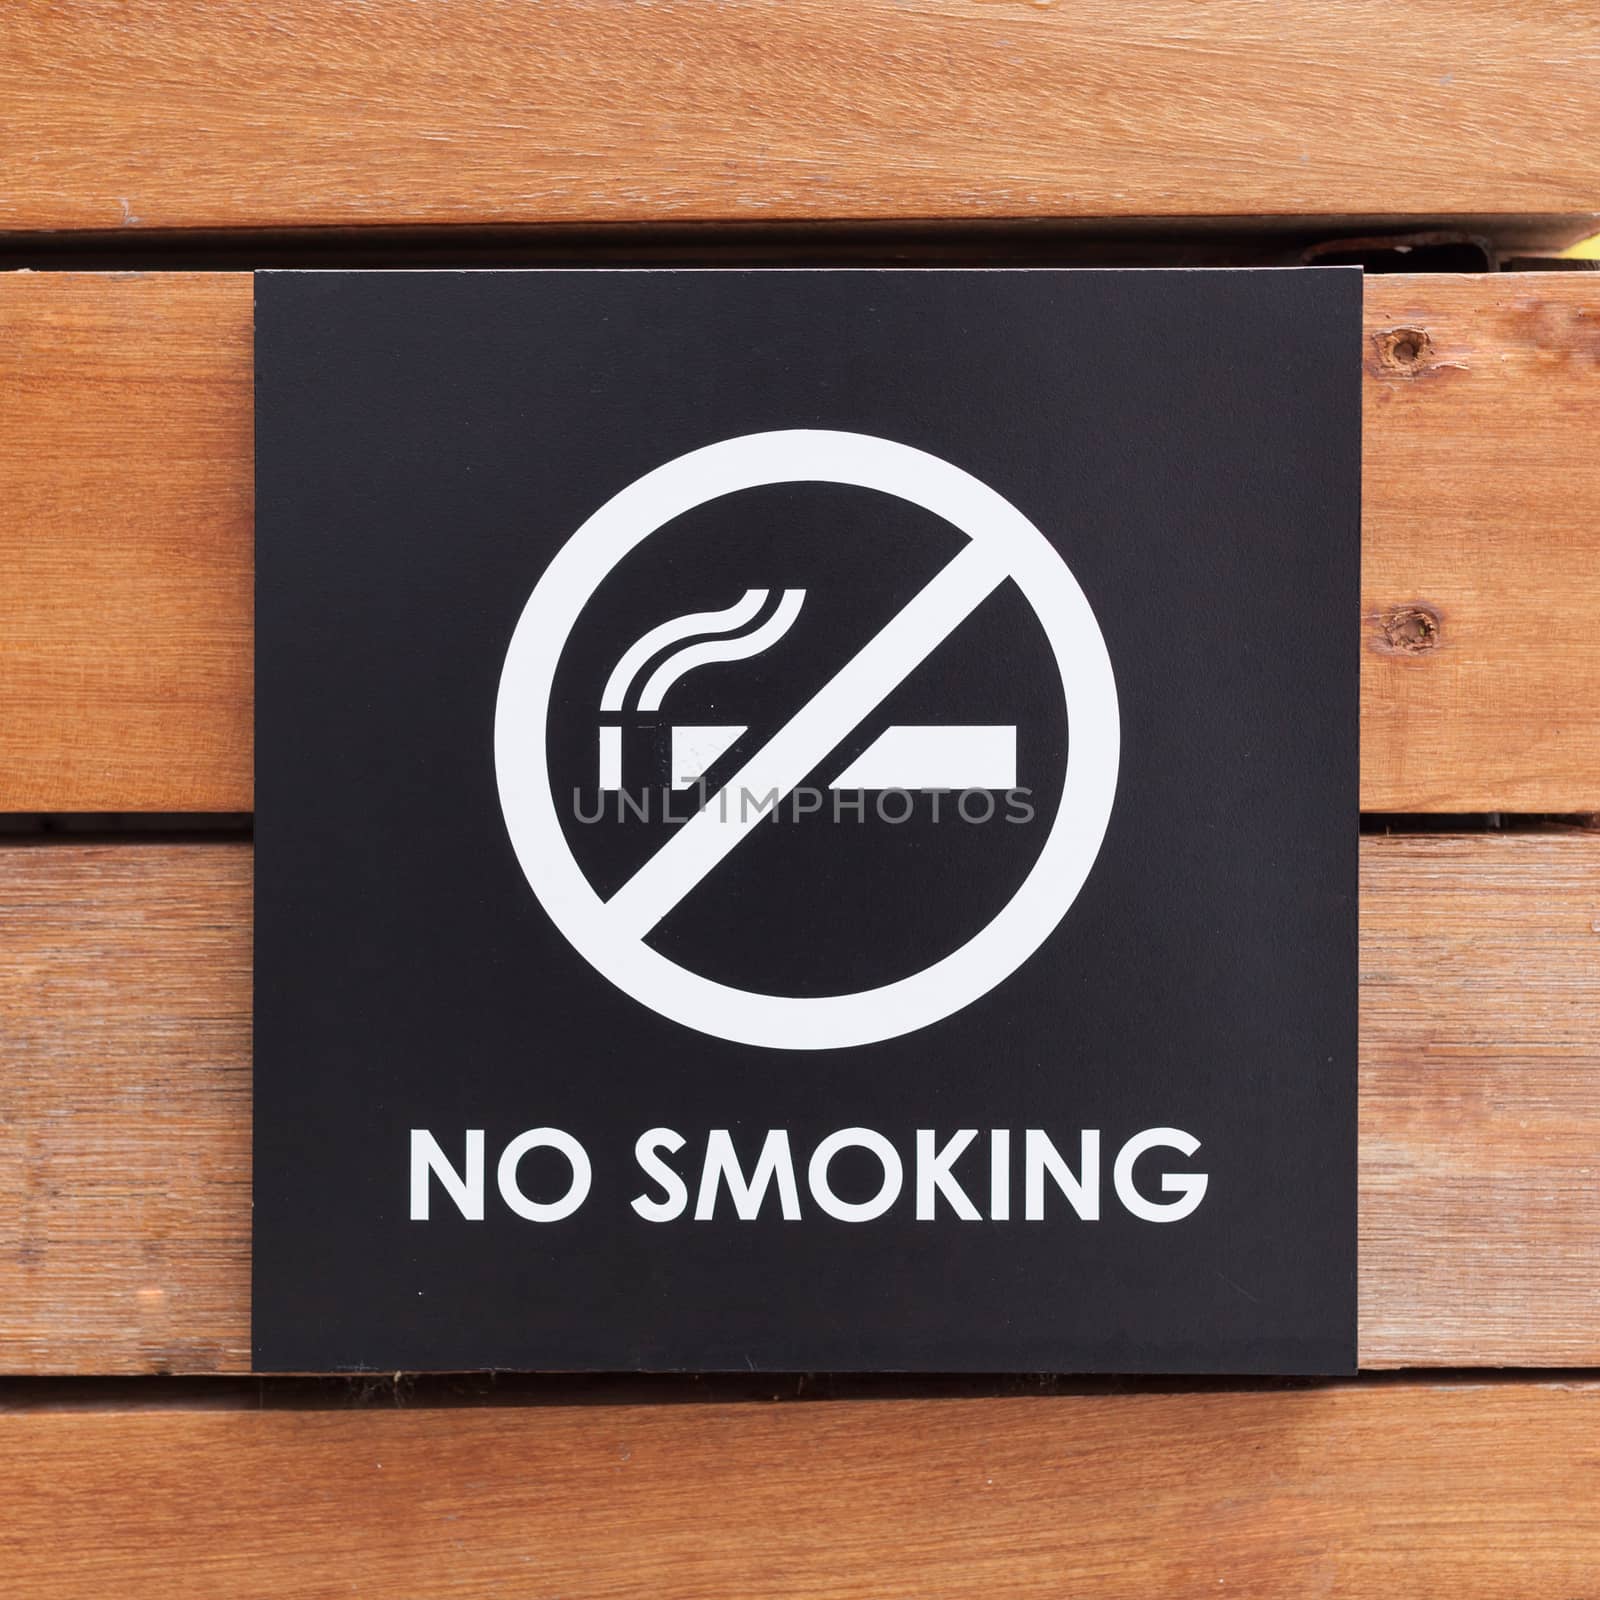 No Smoking sign on a wood wall .